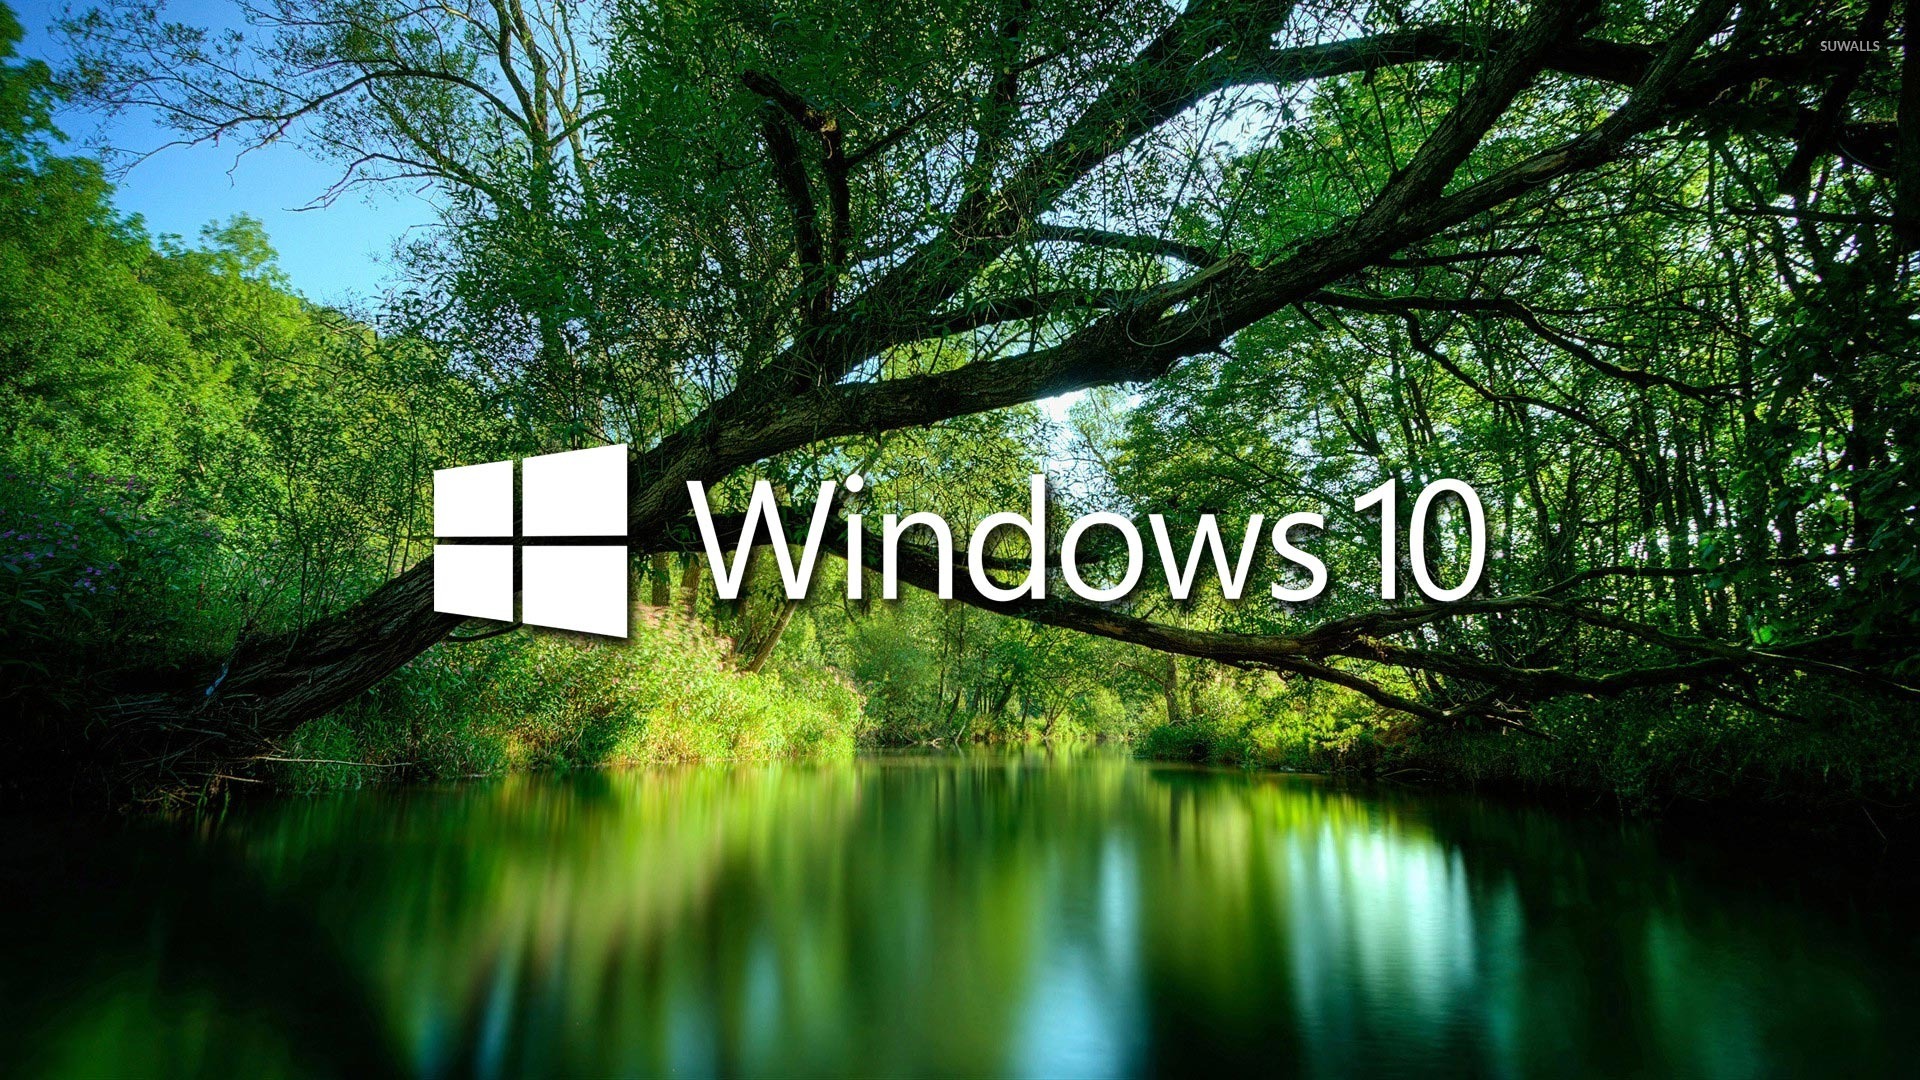 14 Landscape Windows 10 Wallpaper Hd 1920x1080 Nature Basty Wallpaper